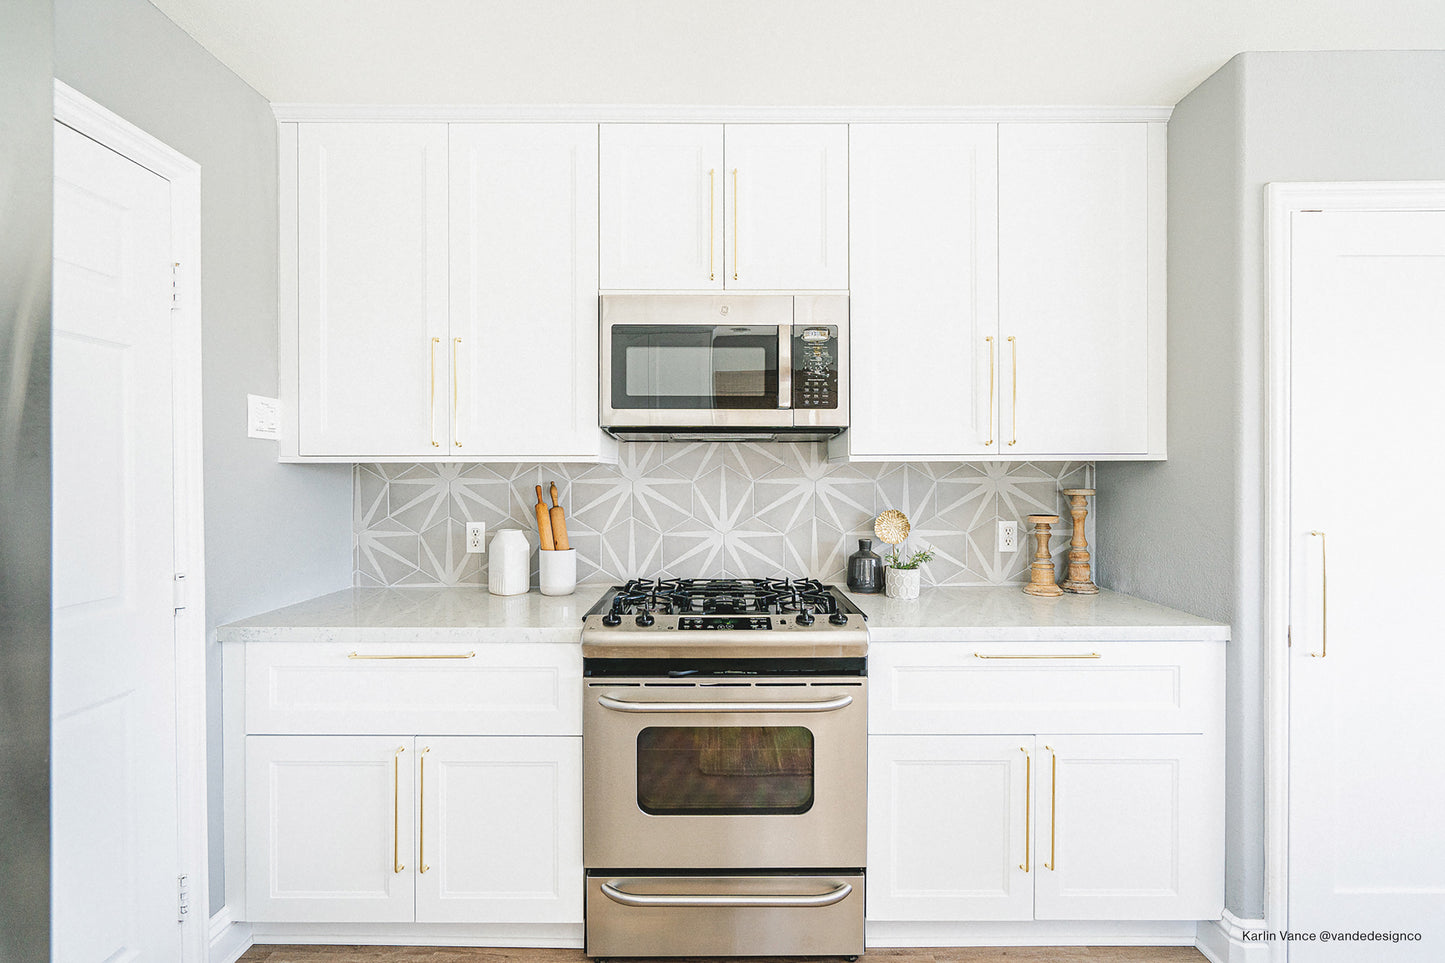 Simplistic, modern kitchen with decorative hexagon backsplash tile in the style Stella 